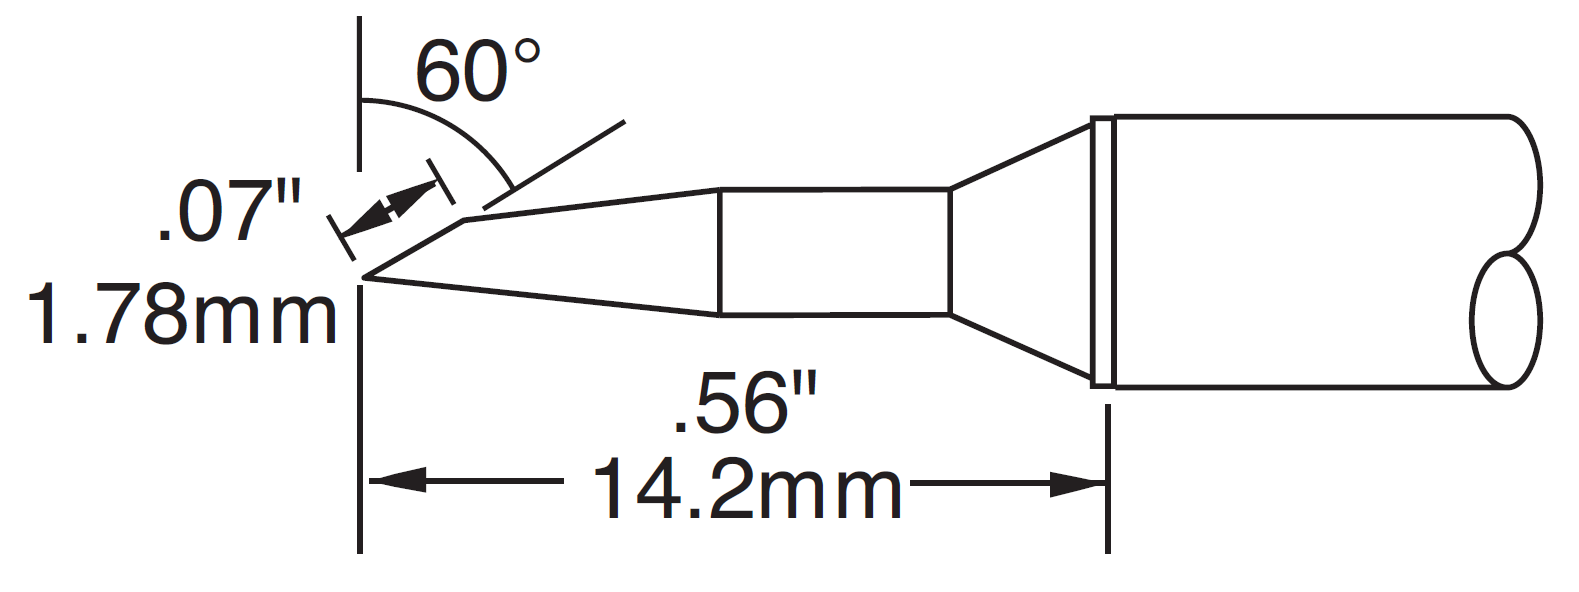 Картридж-наконечник для СV/MX, скос 60° удлиненный, 1.78х14.2мм (замена STTC-547)